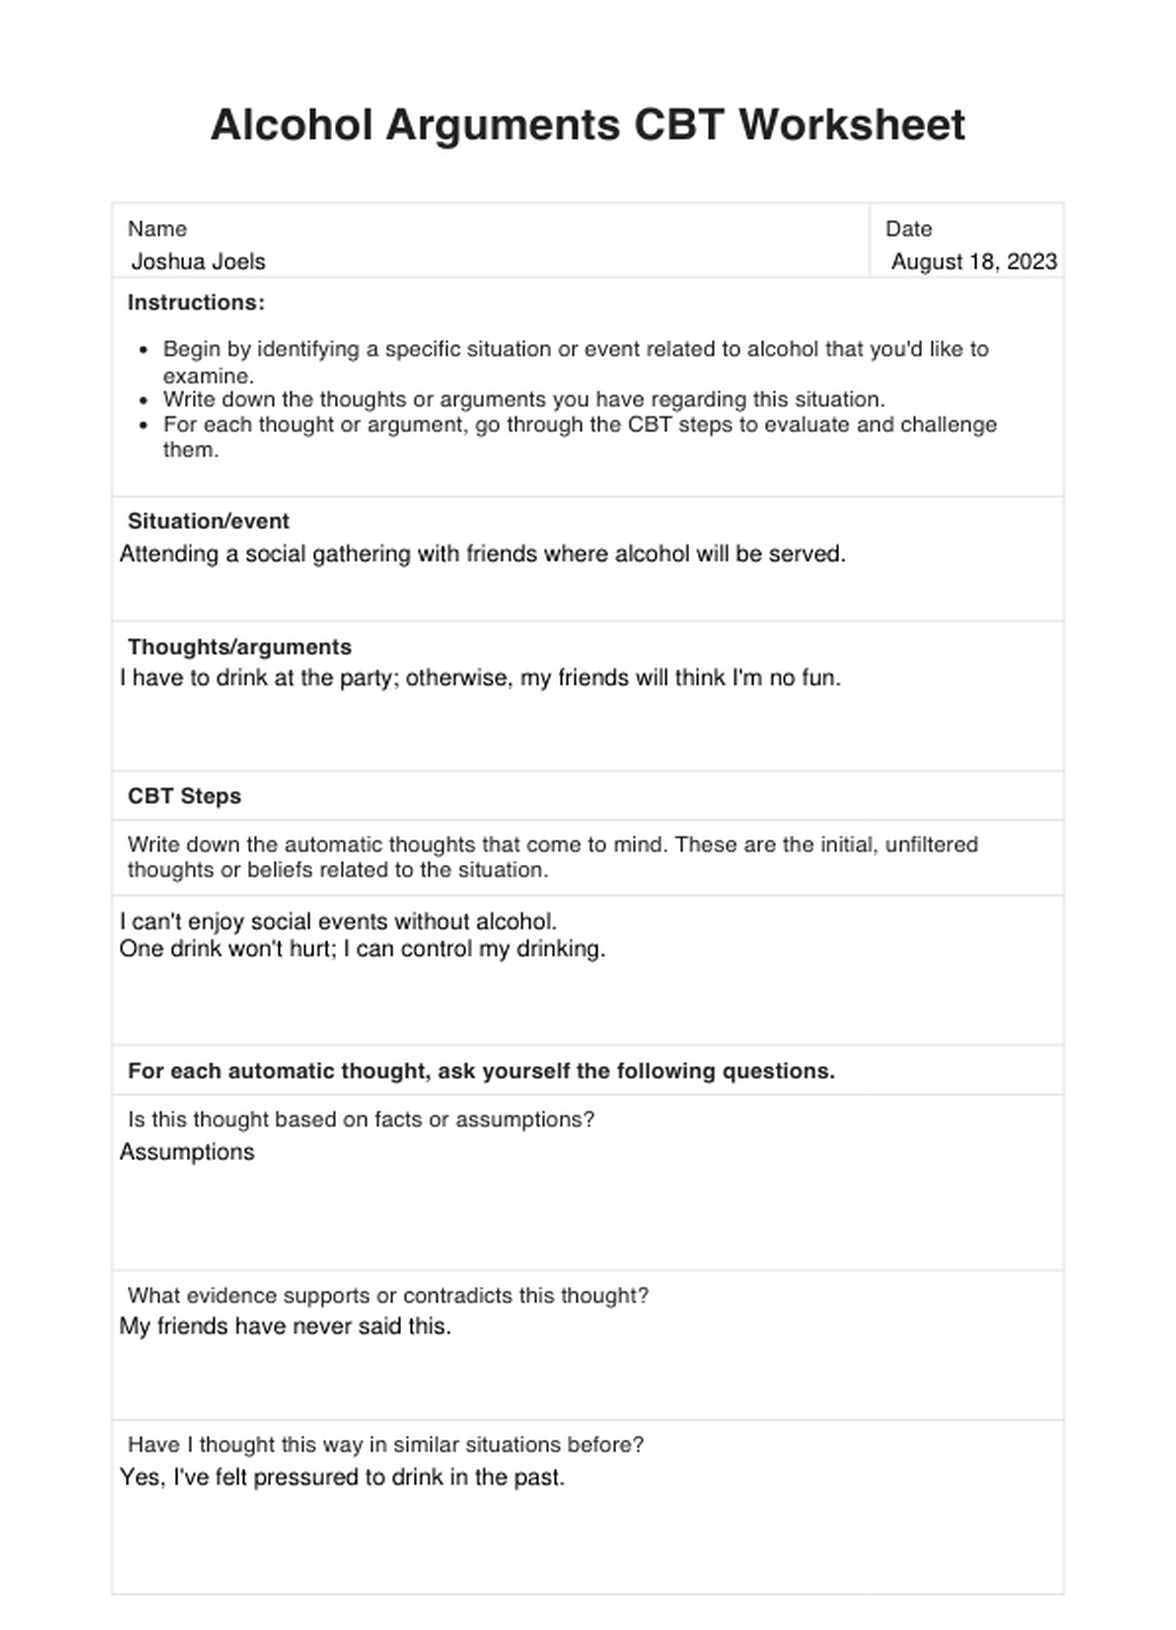 Alcohol Arguments CBT Worksheets PDF Example